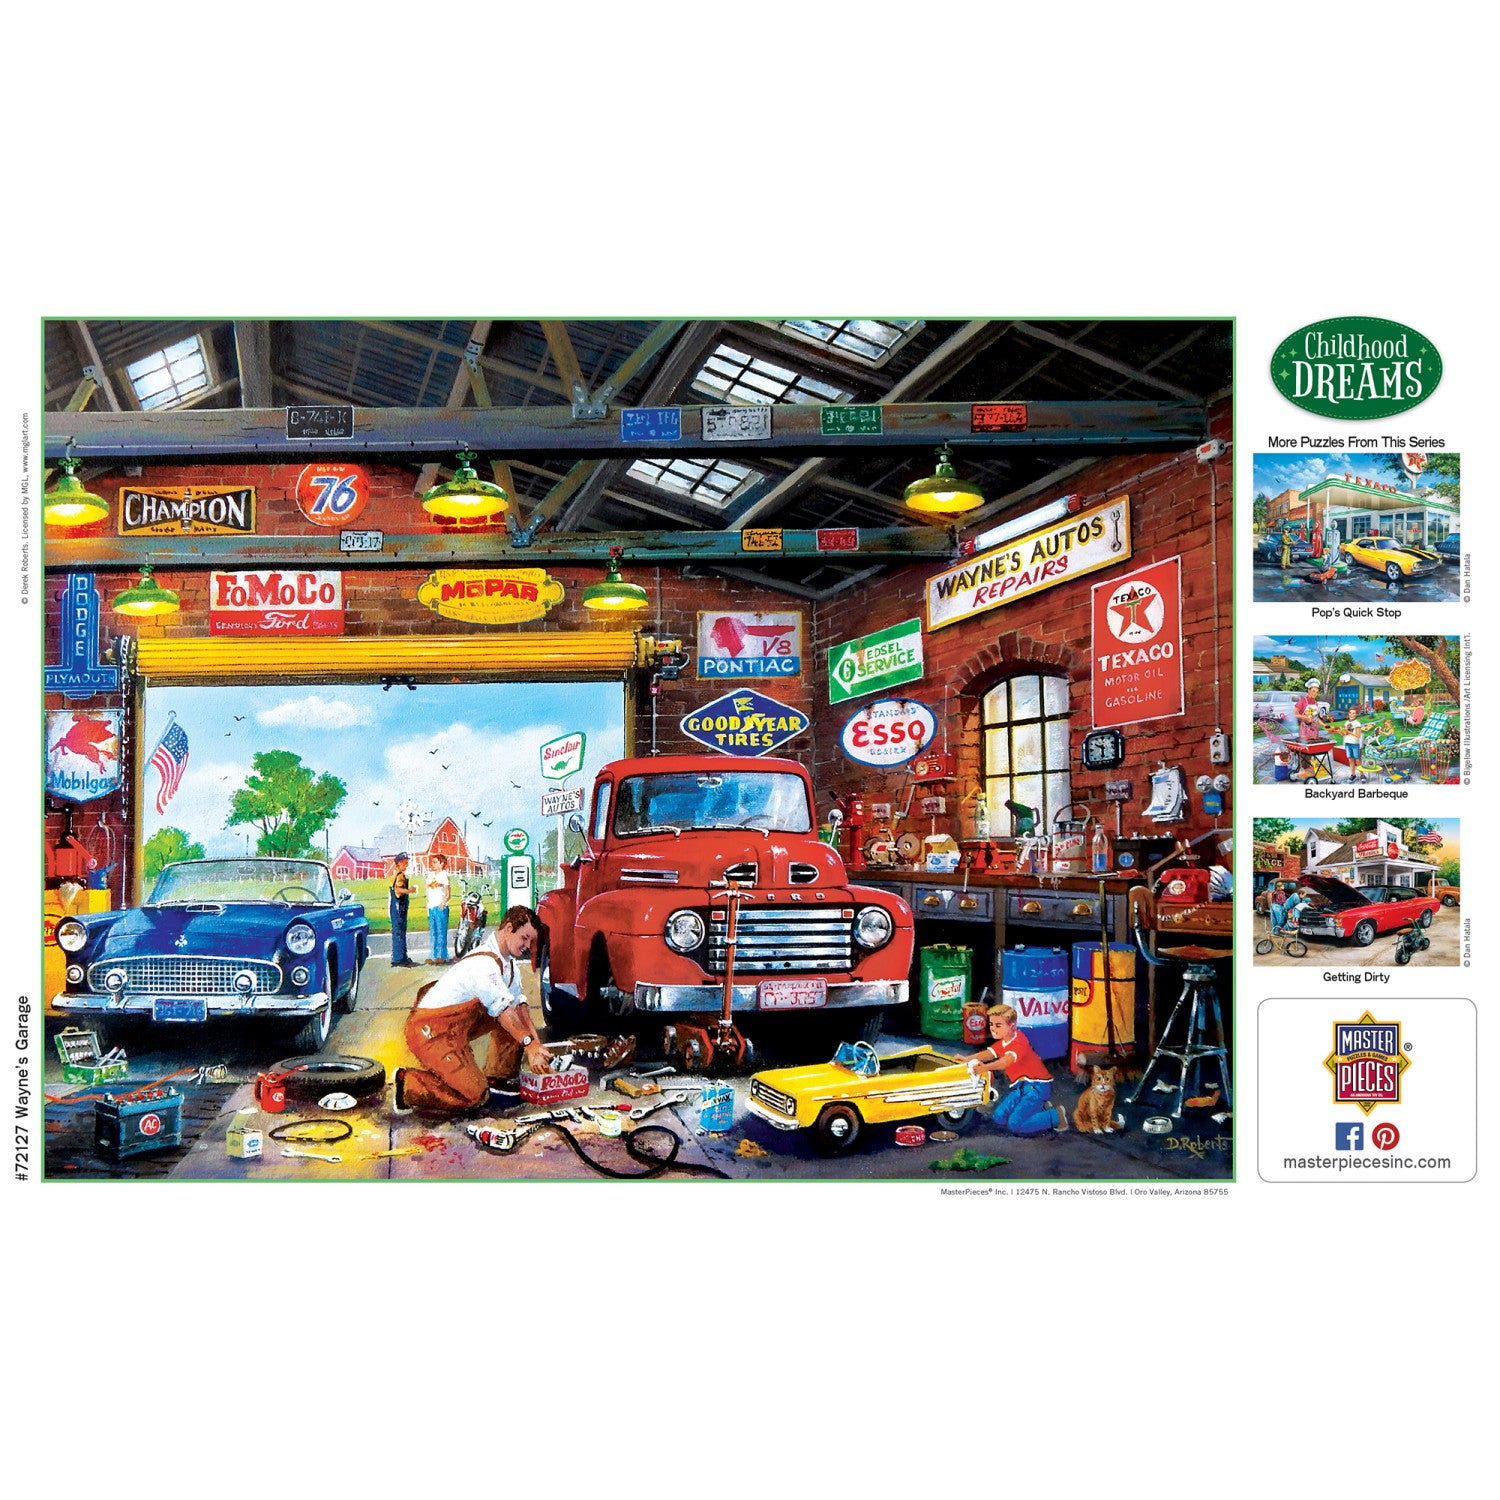 Childhood Dreams - Wayne's Garage 1000 Piece Jigsaw Puzzle